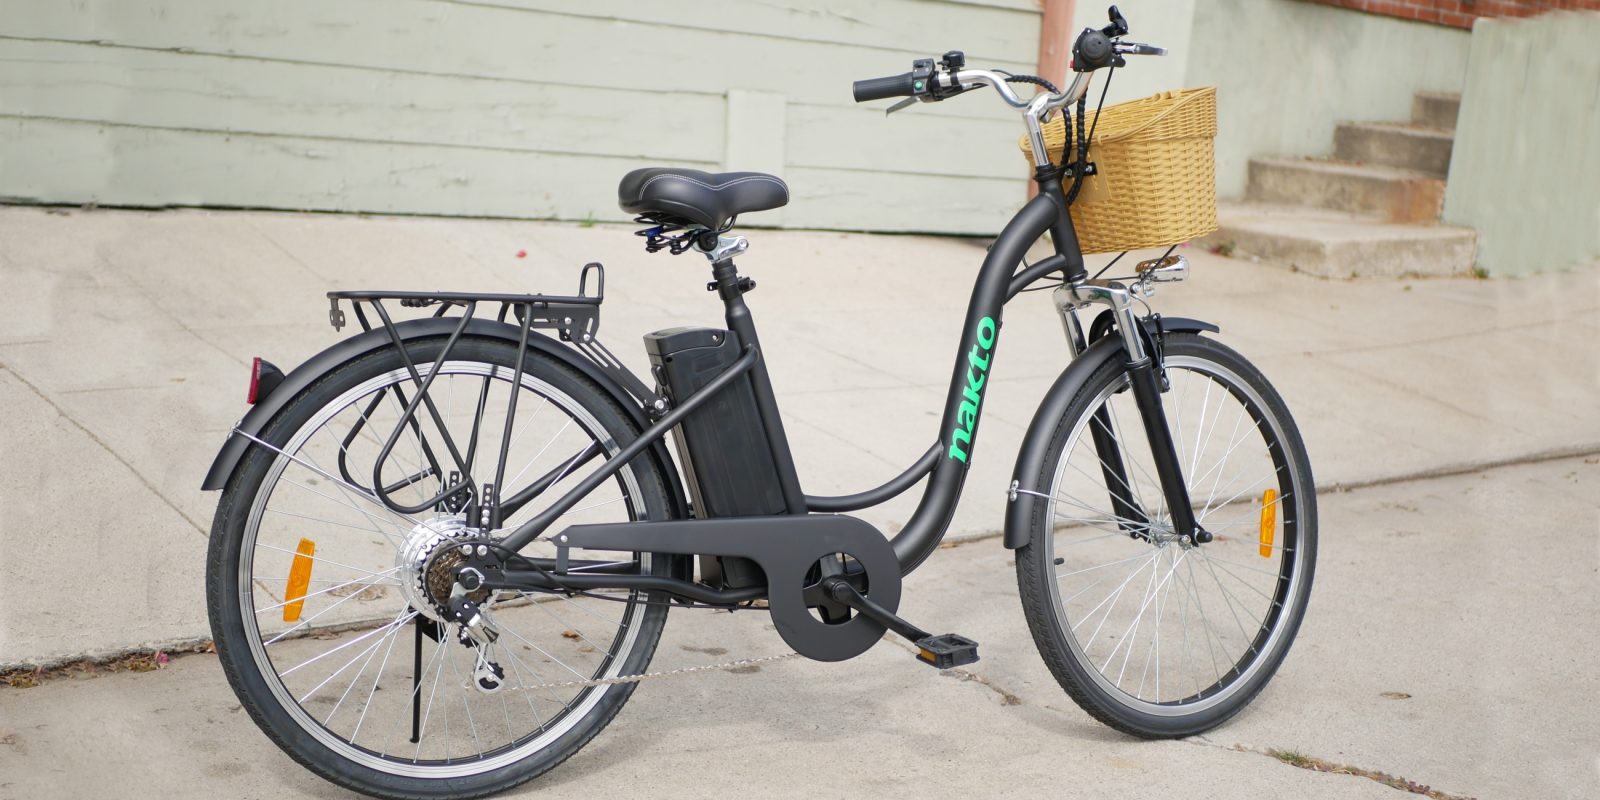 nakto 26" electric cargo bike review